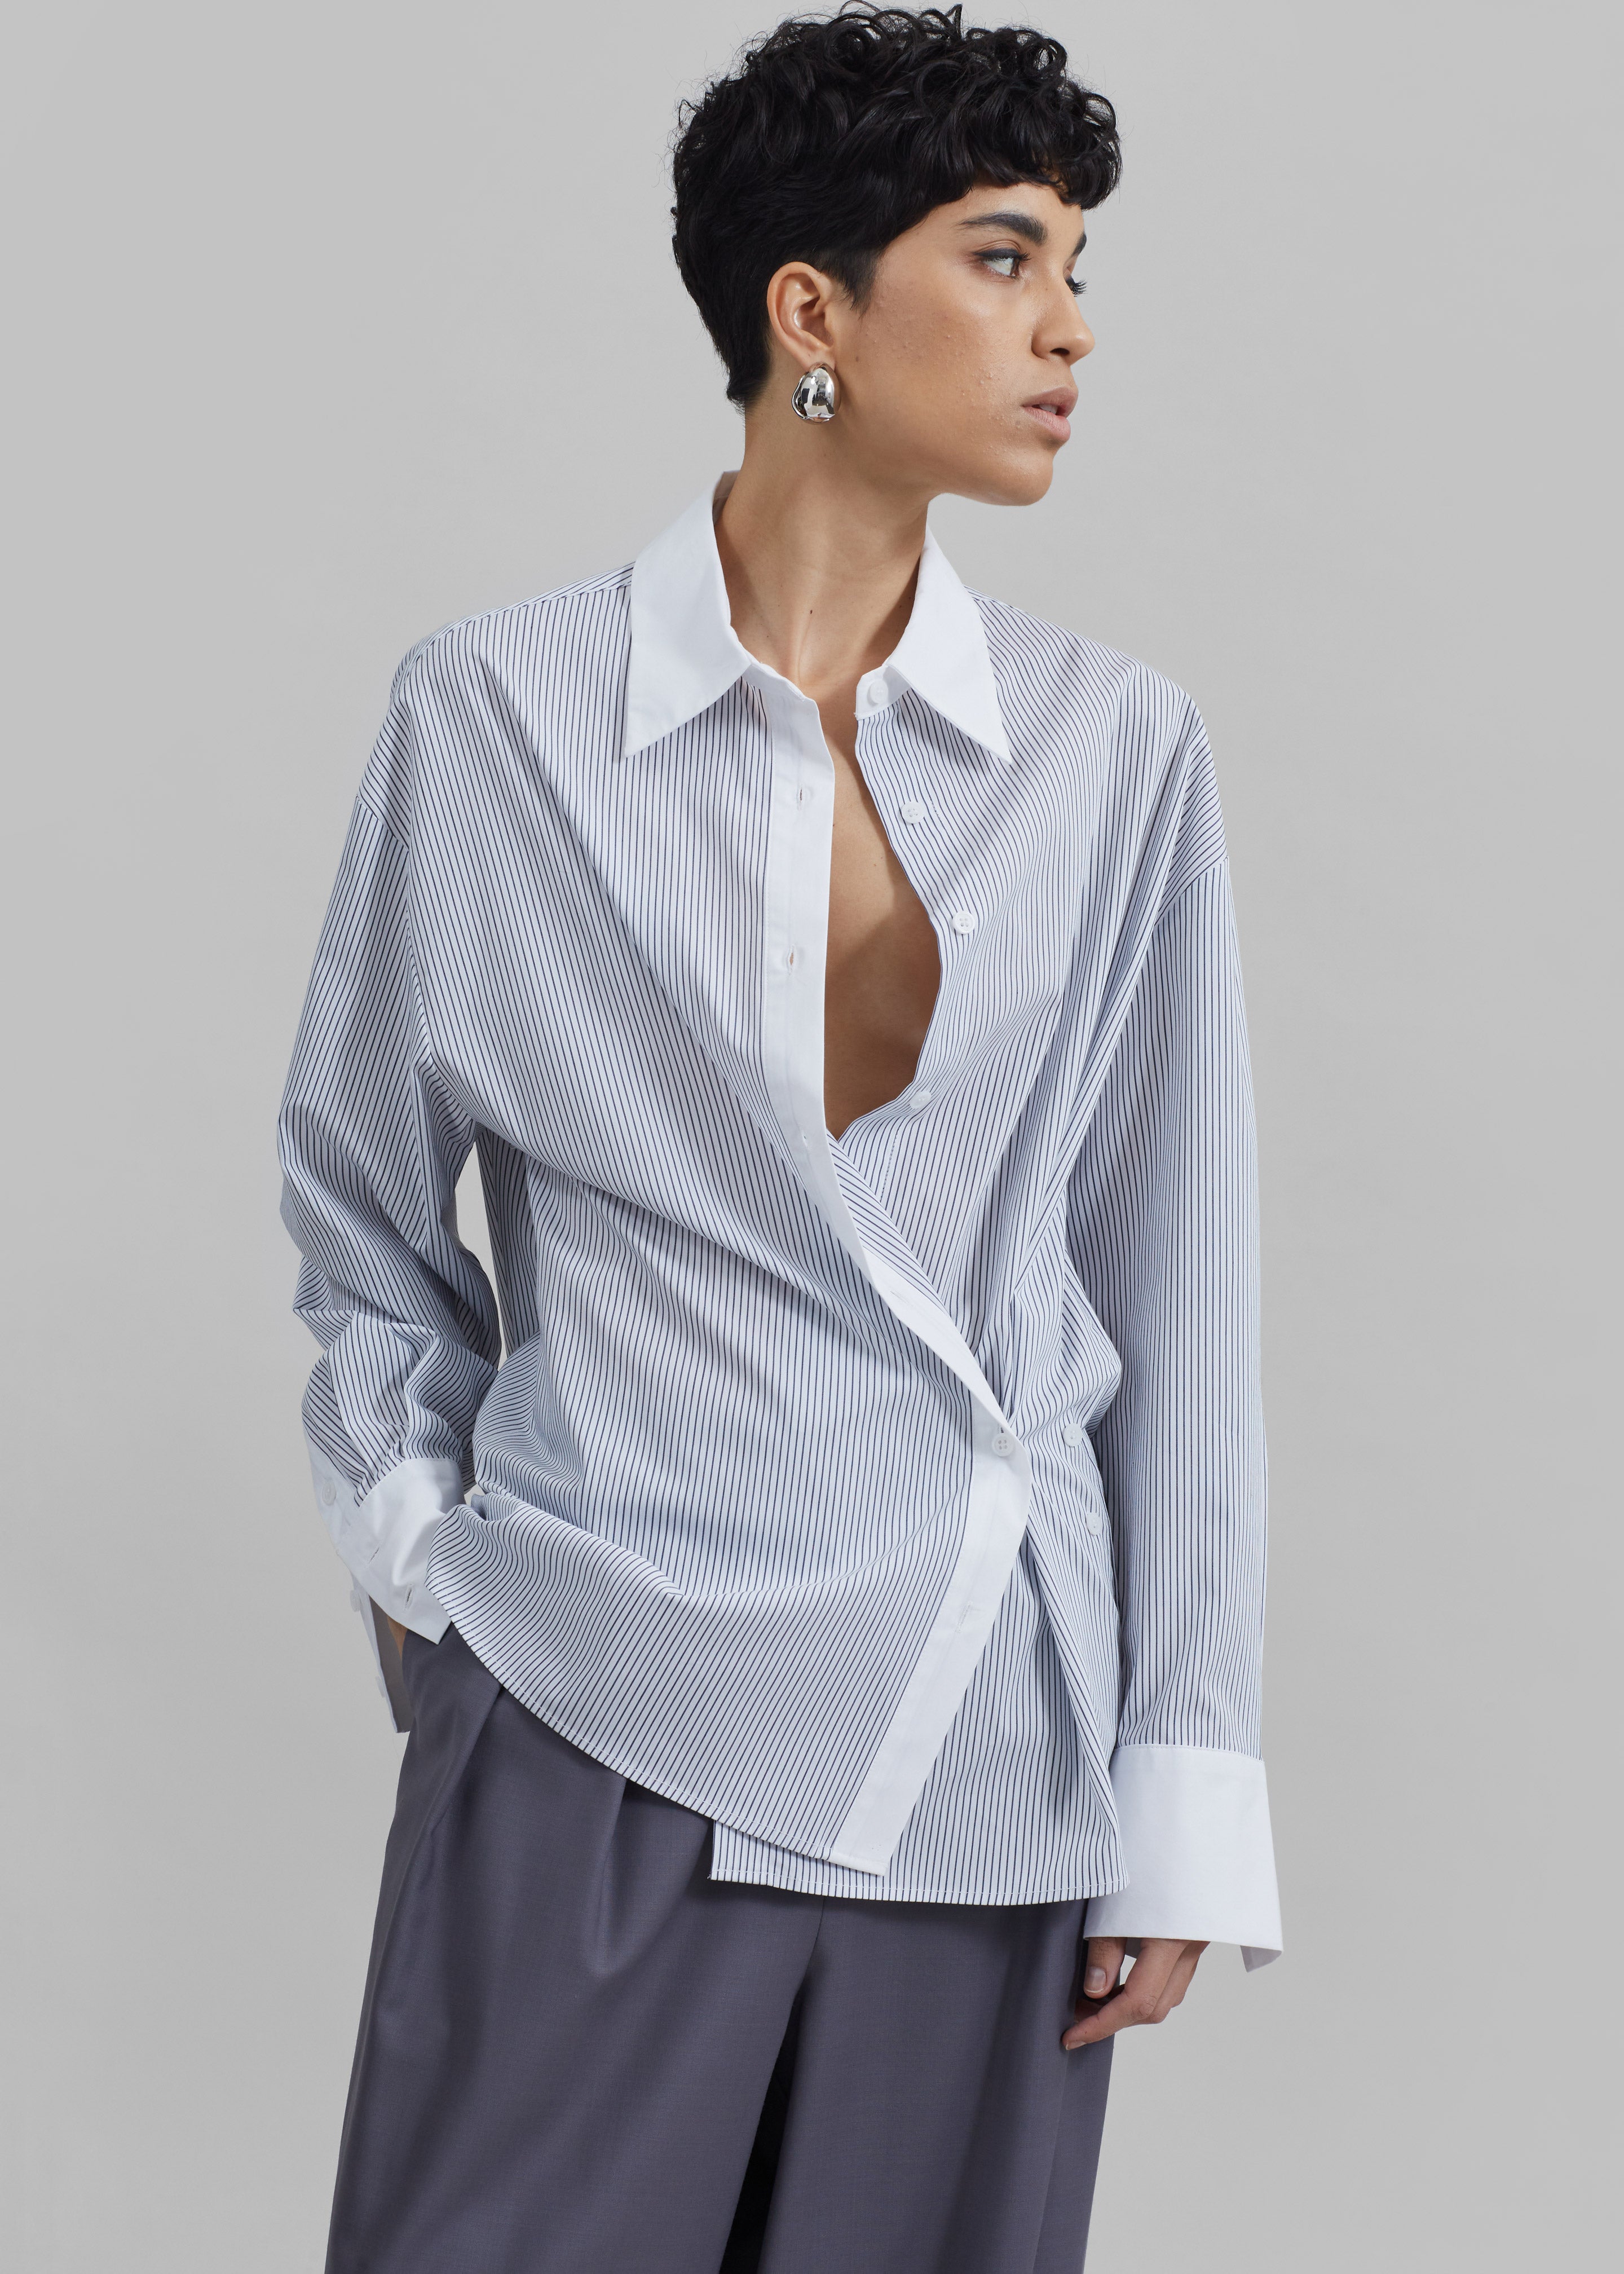 Nerina Button Up Shirt - Black/White Stripe - 1